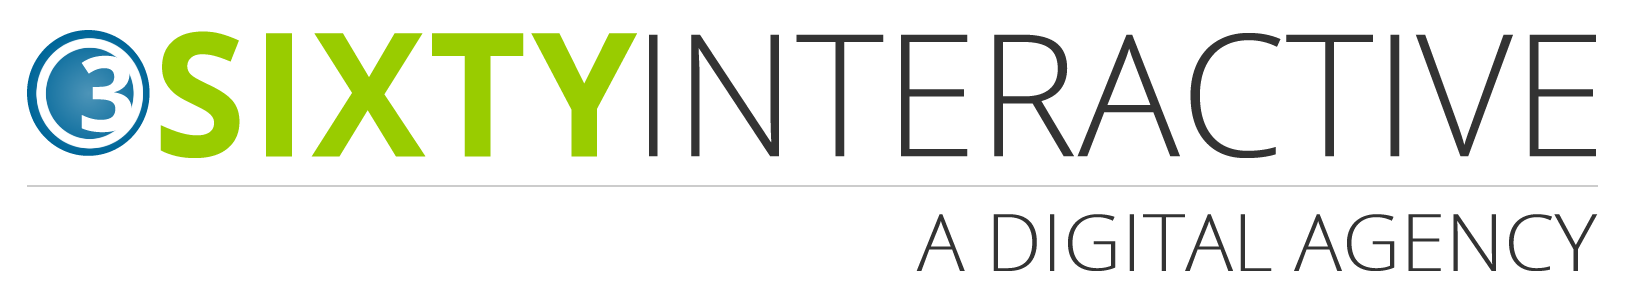 3Sixty Interactive Logo